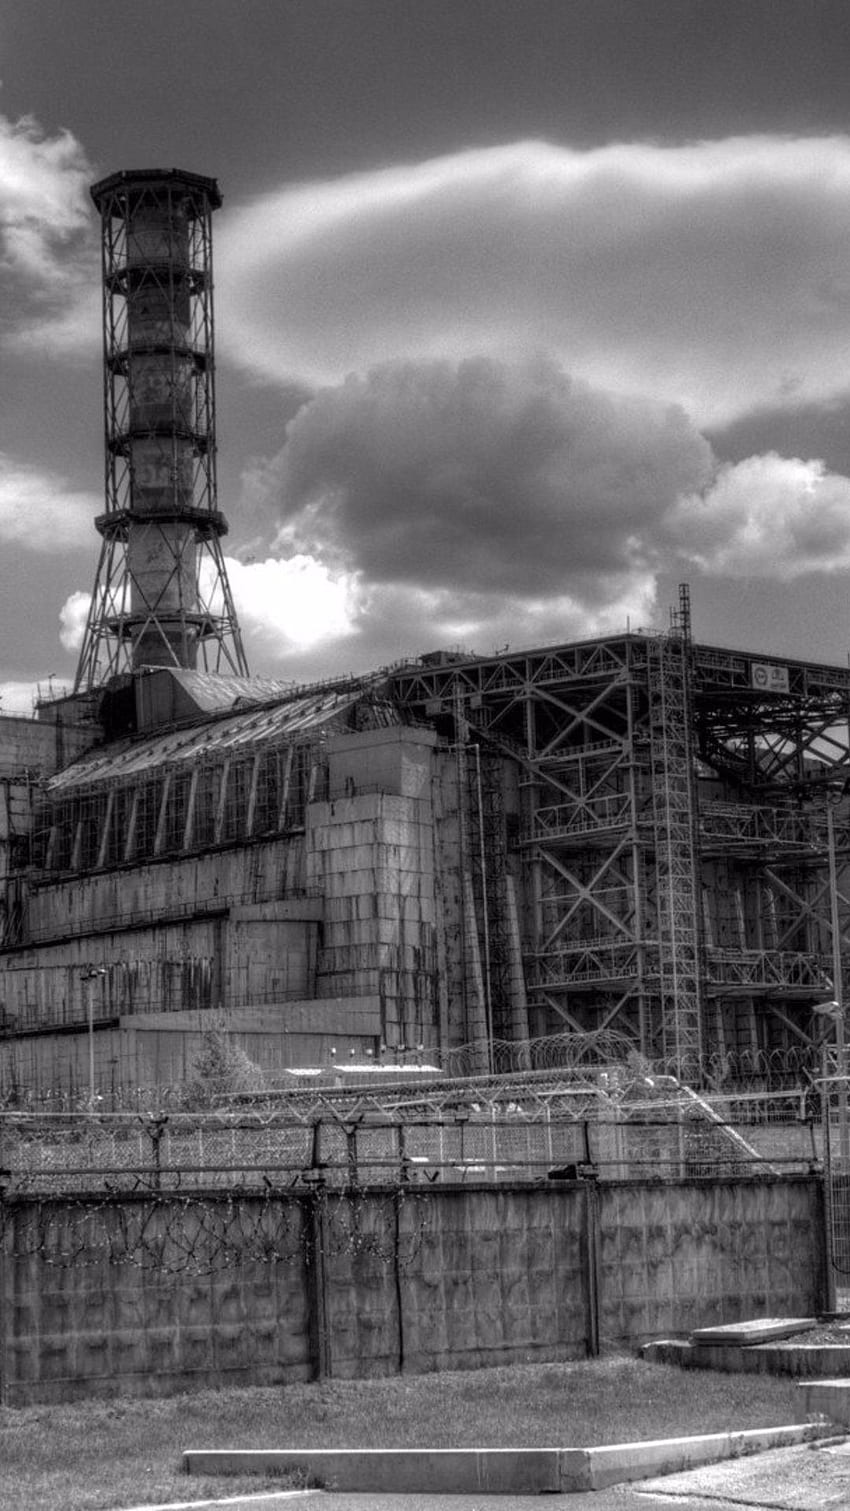 1440x900 Resolution S.T.A.L.K.E.R.: Shadow of Chernobyl 1440x900 Wallpaper  - Wallpapers Den